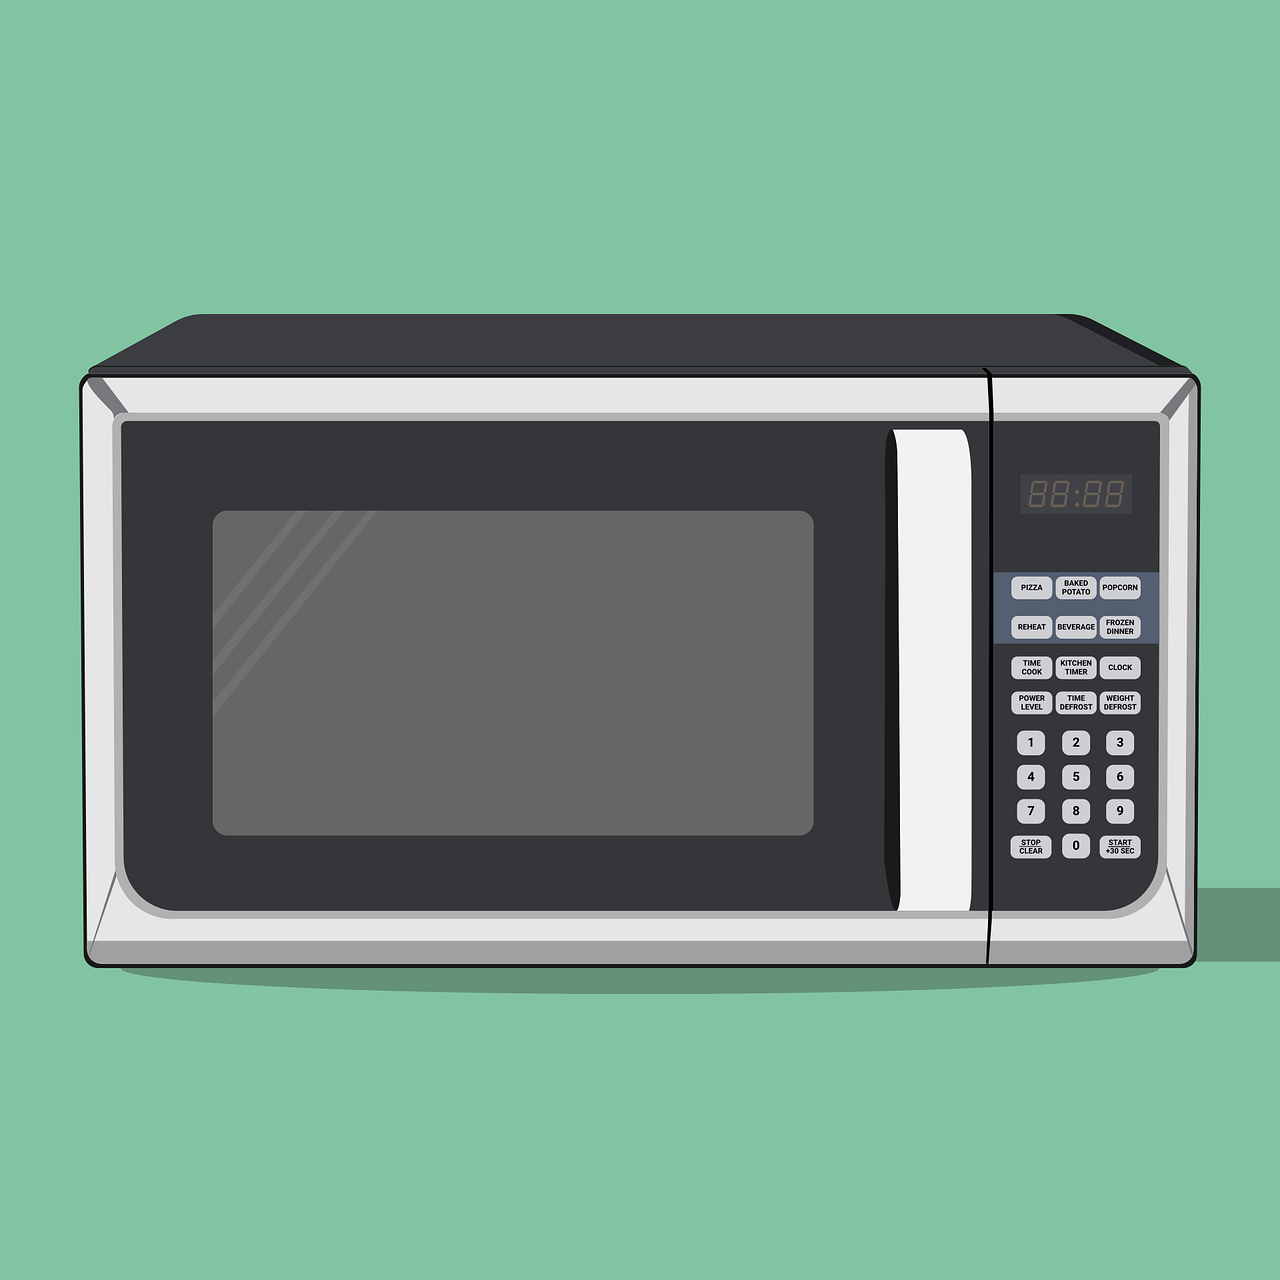 Kitchen microwave on green background